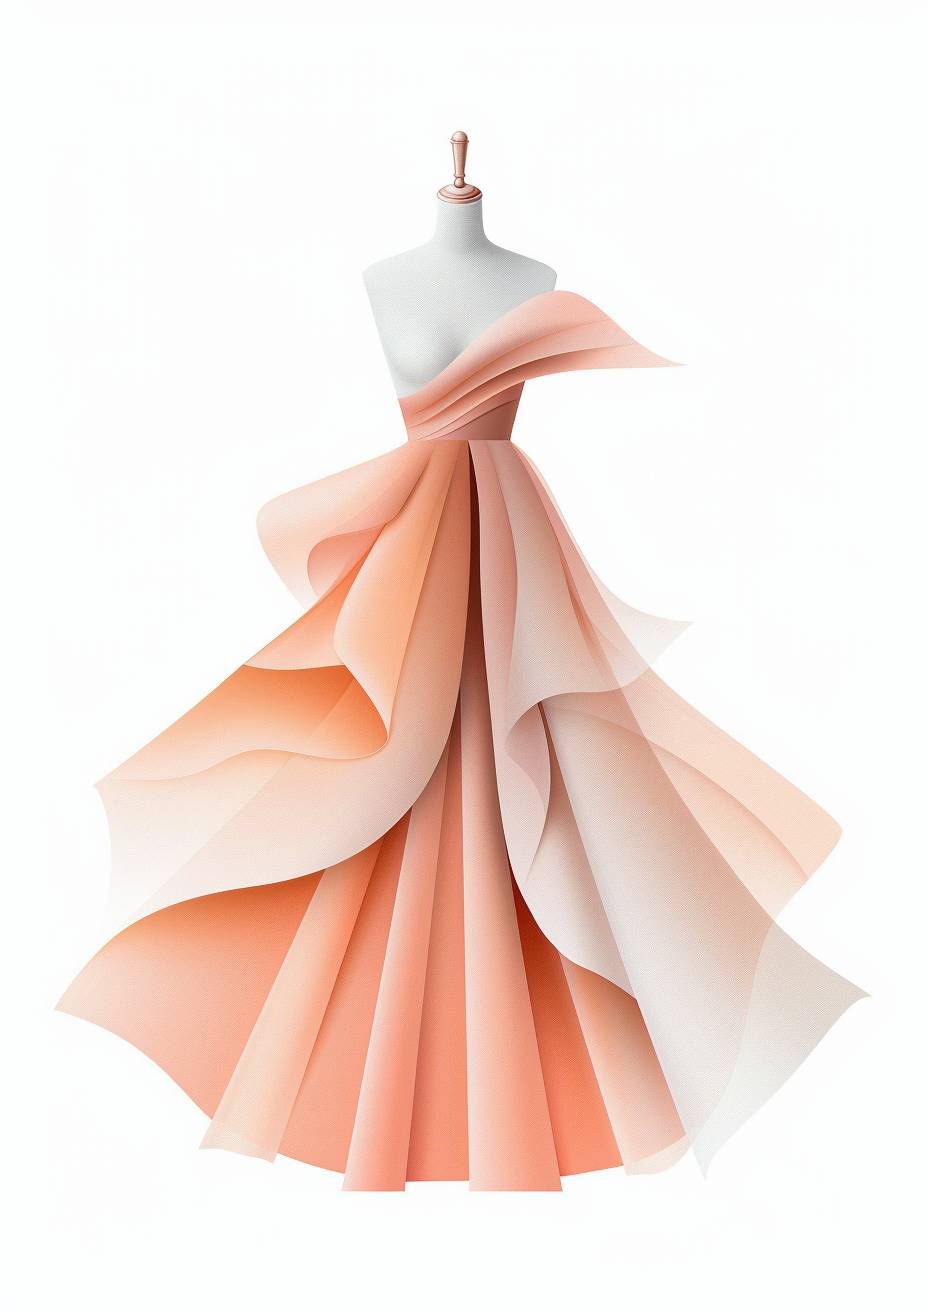 Clothing plan structure diagram, a dress, Minimalist, pink, chiffon, asymmetric structure, pencil line draft,